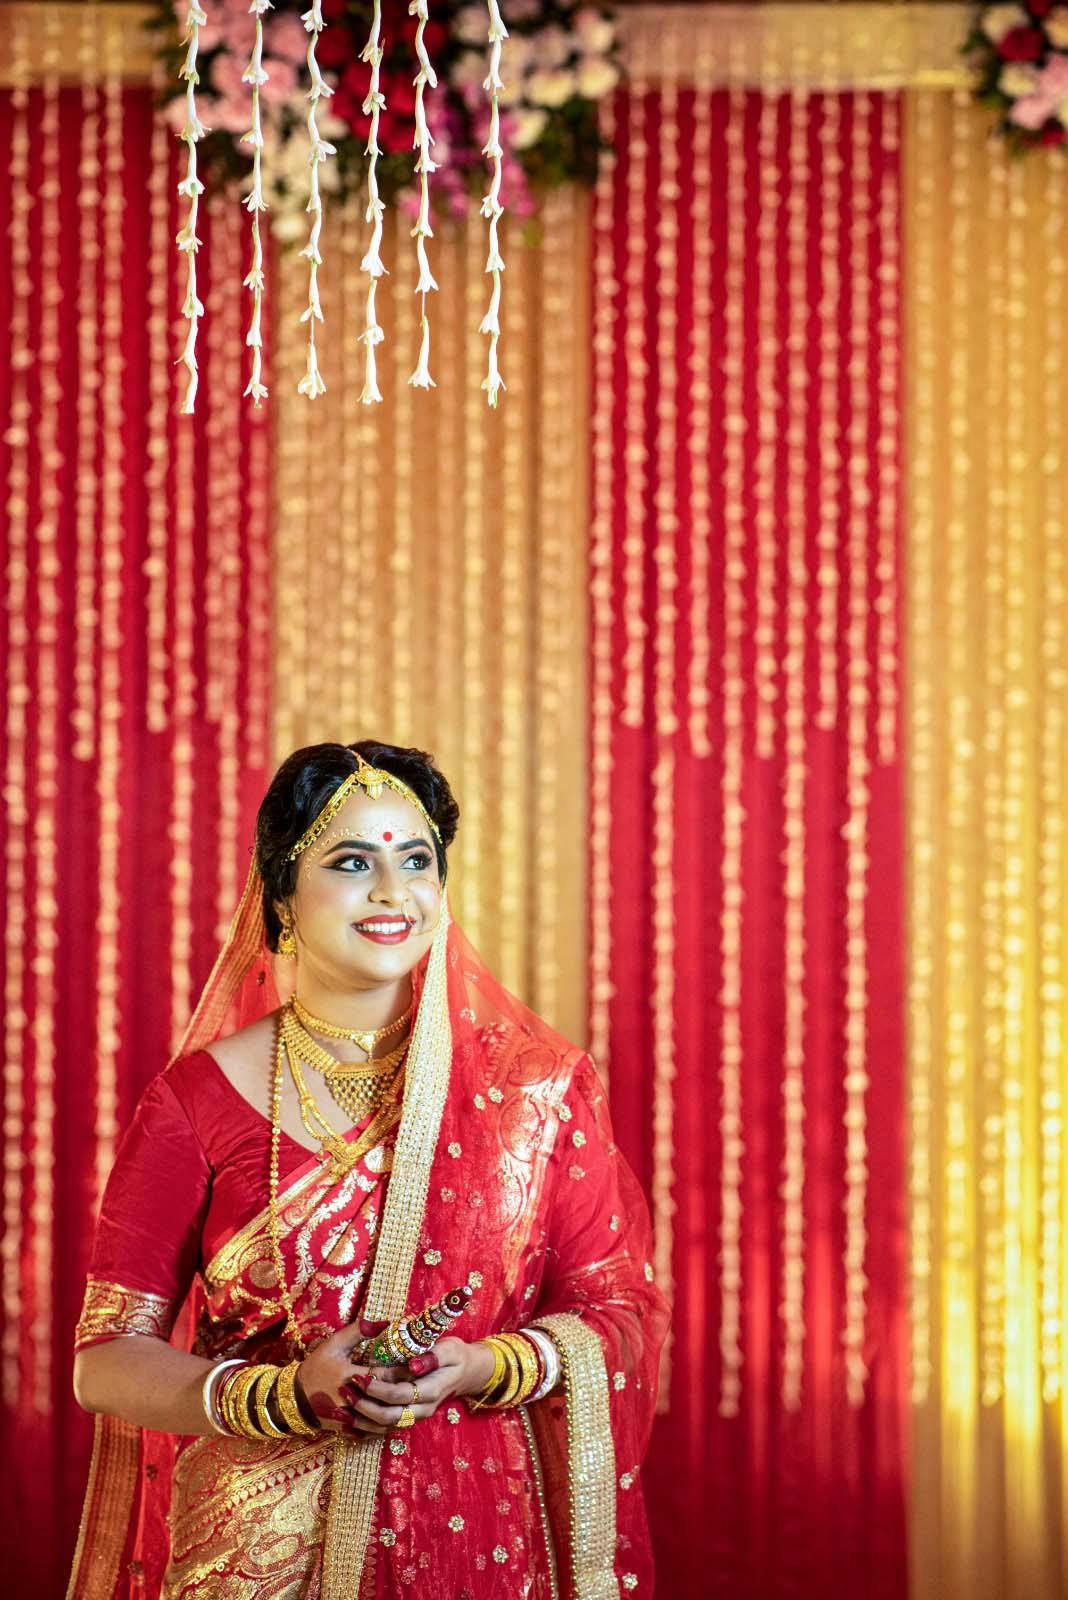 Silver embellishments in bridal mukut design by Best wedding photographers in kolkata